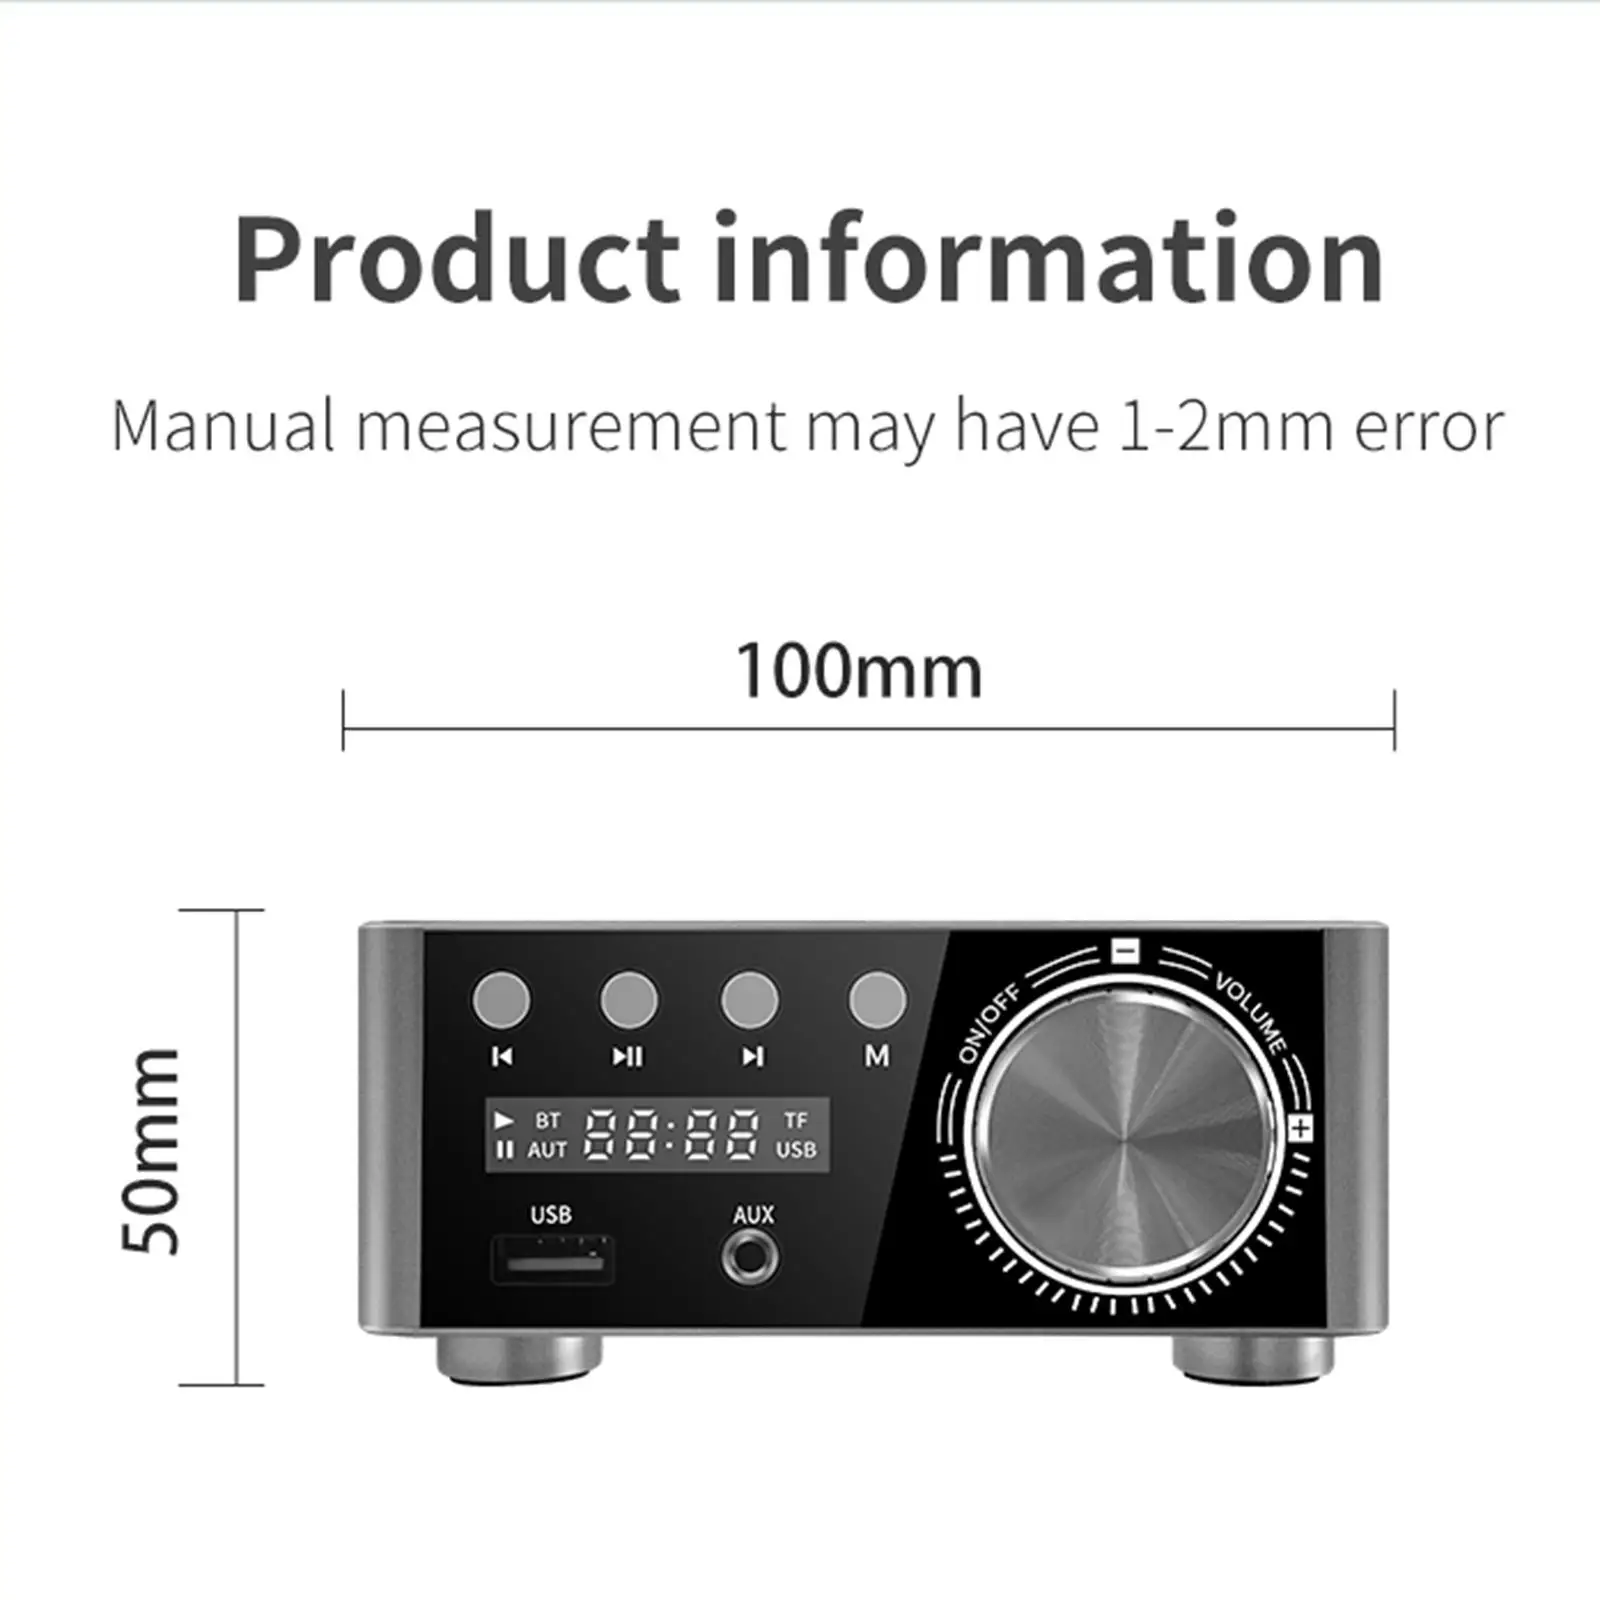 Mini Amplifier USB AUX BT TF Aut Sound Amplifier Speaker Amplifier 2.0 Channel for Car Home Bar Party MP3 with Power Adapter EUR